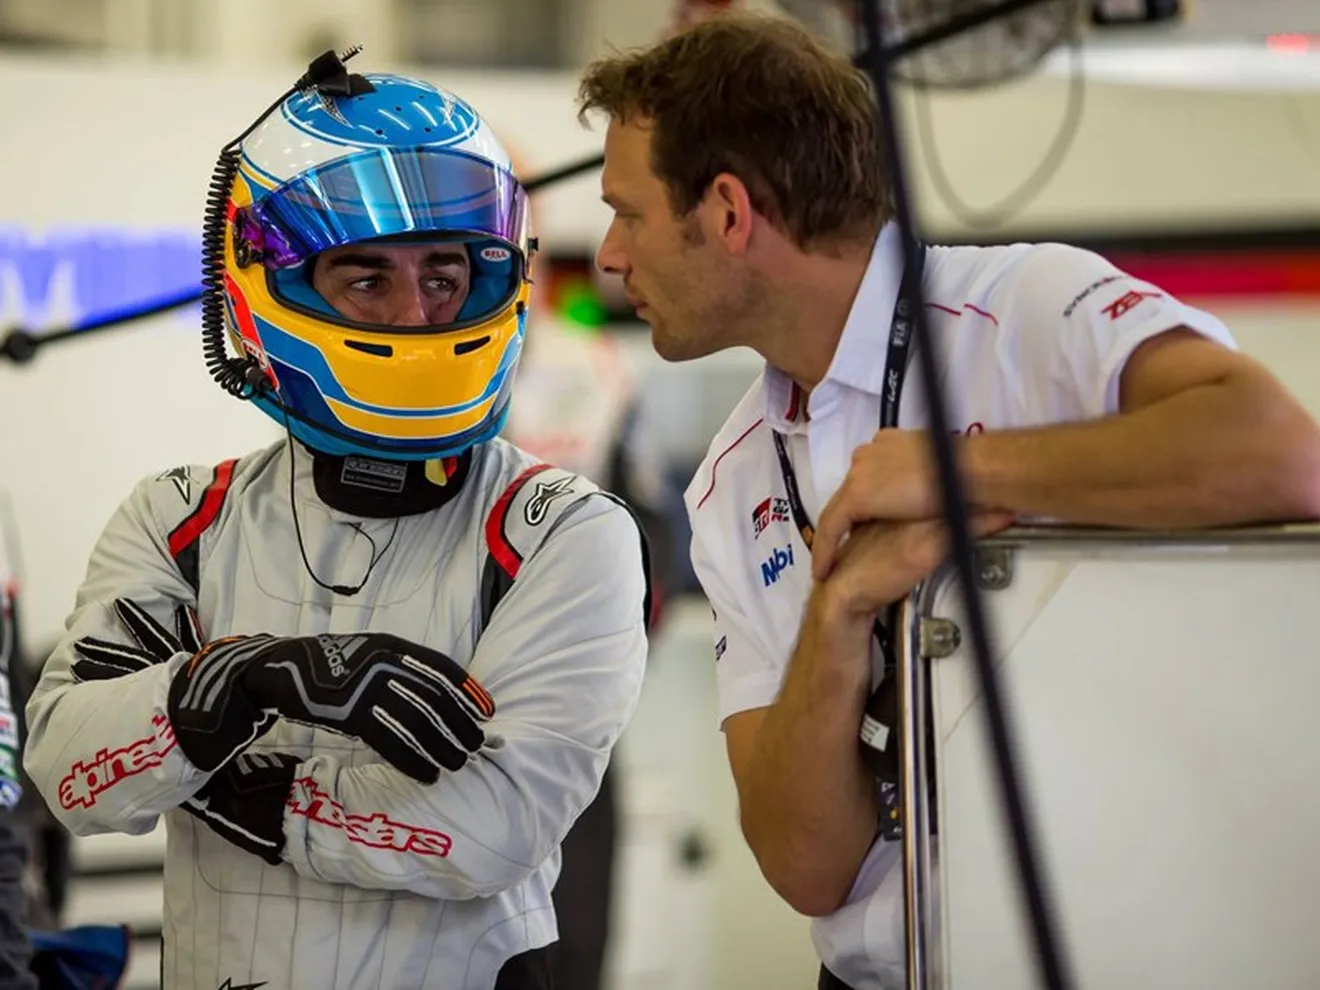 Alonso tras el test de Bahrein: "Los LMP1 son increíbles de pilotar"